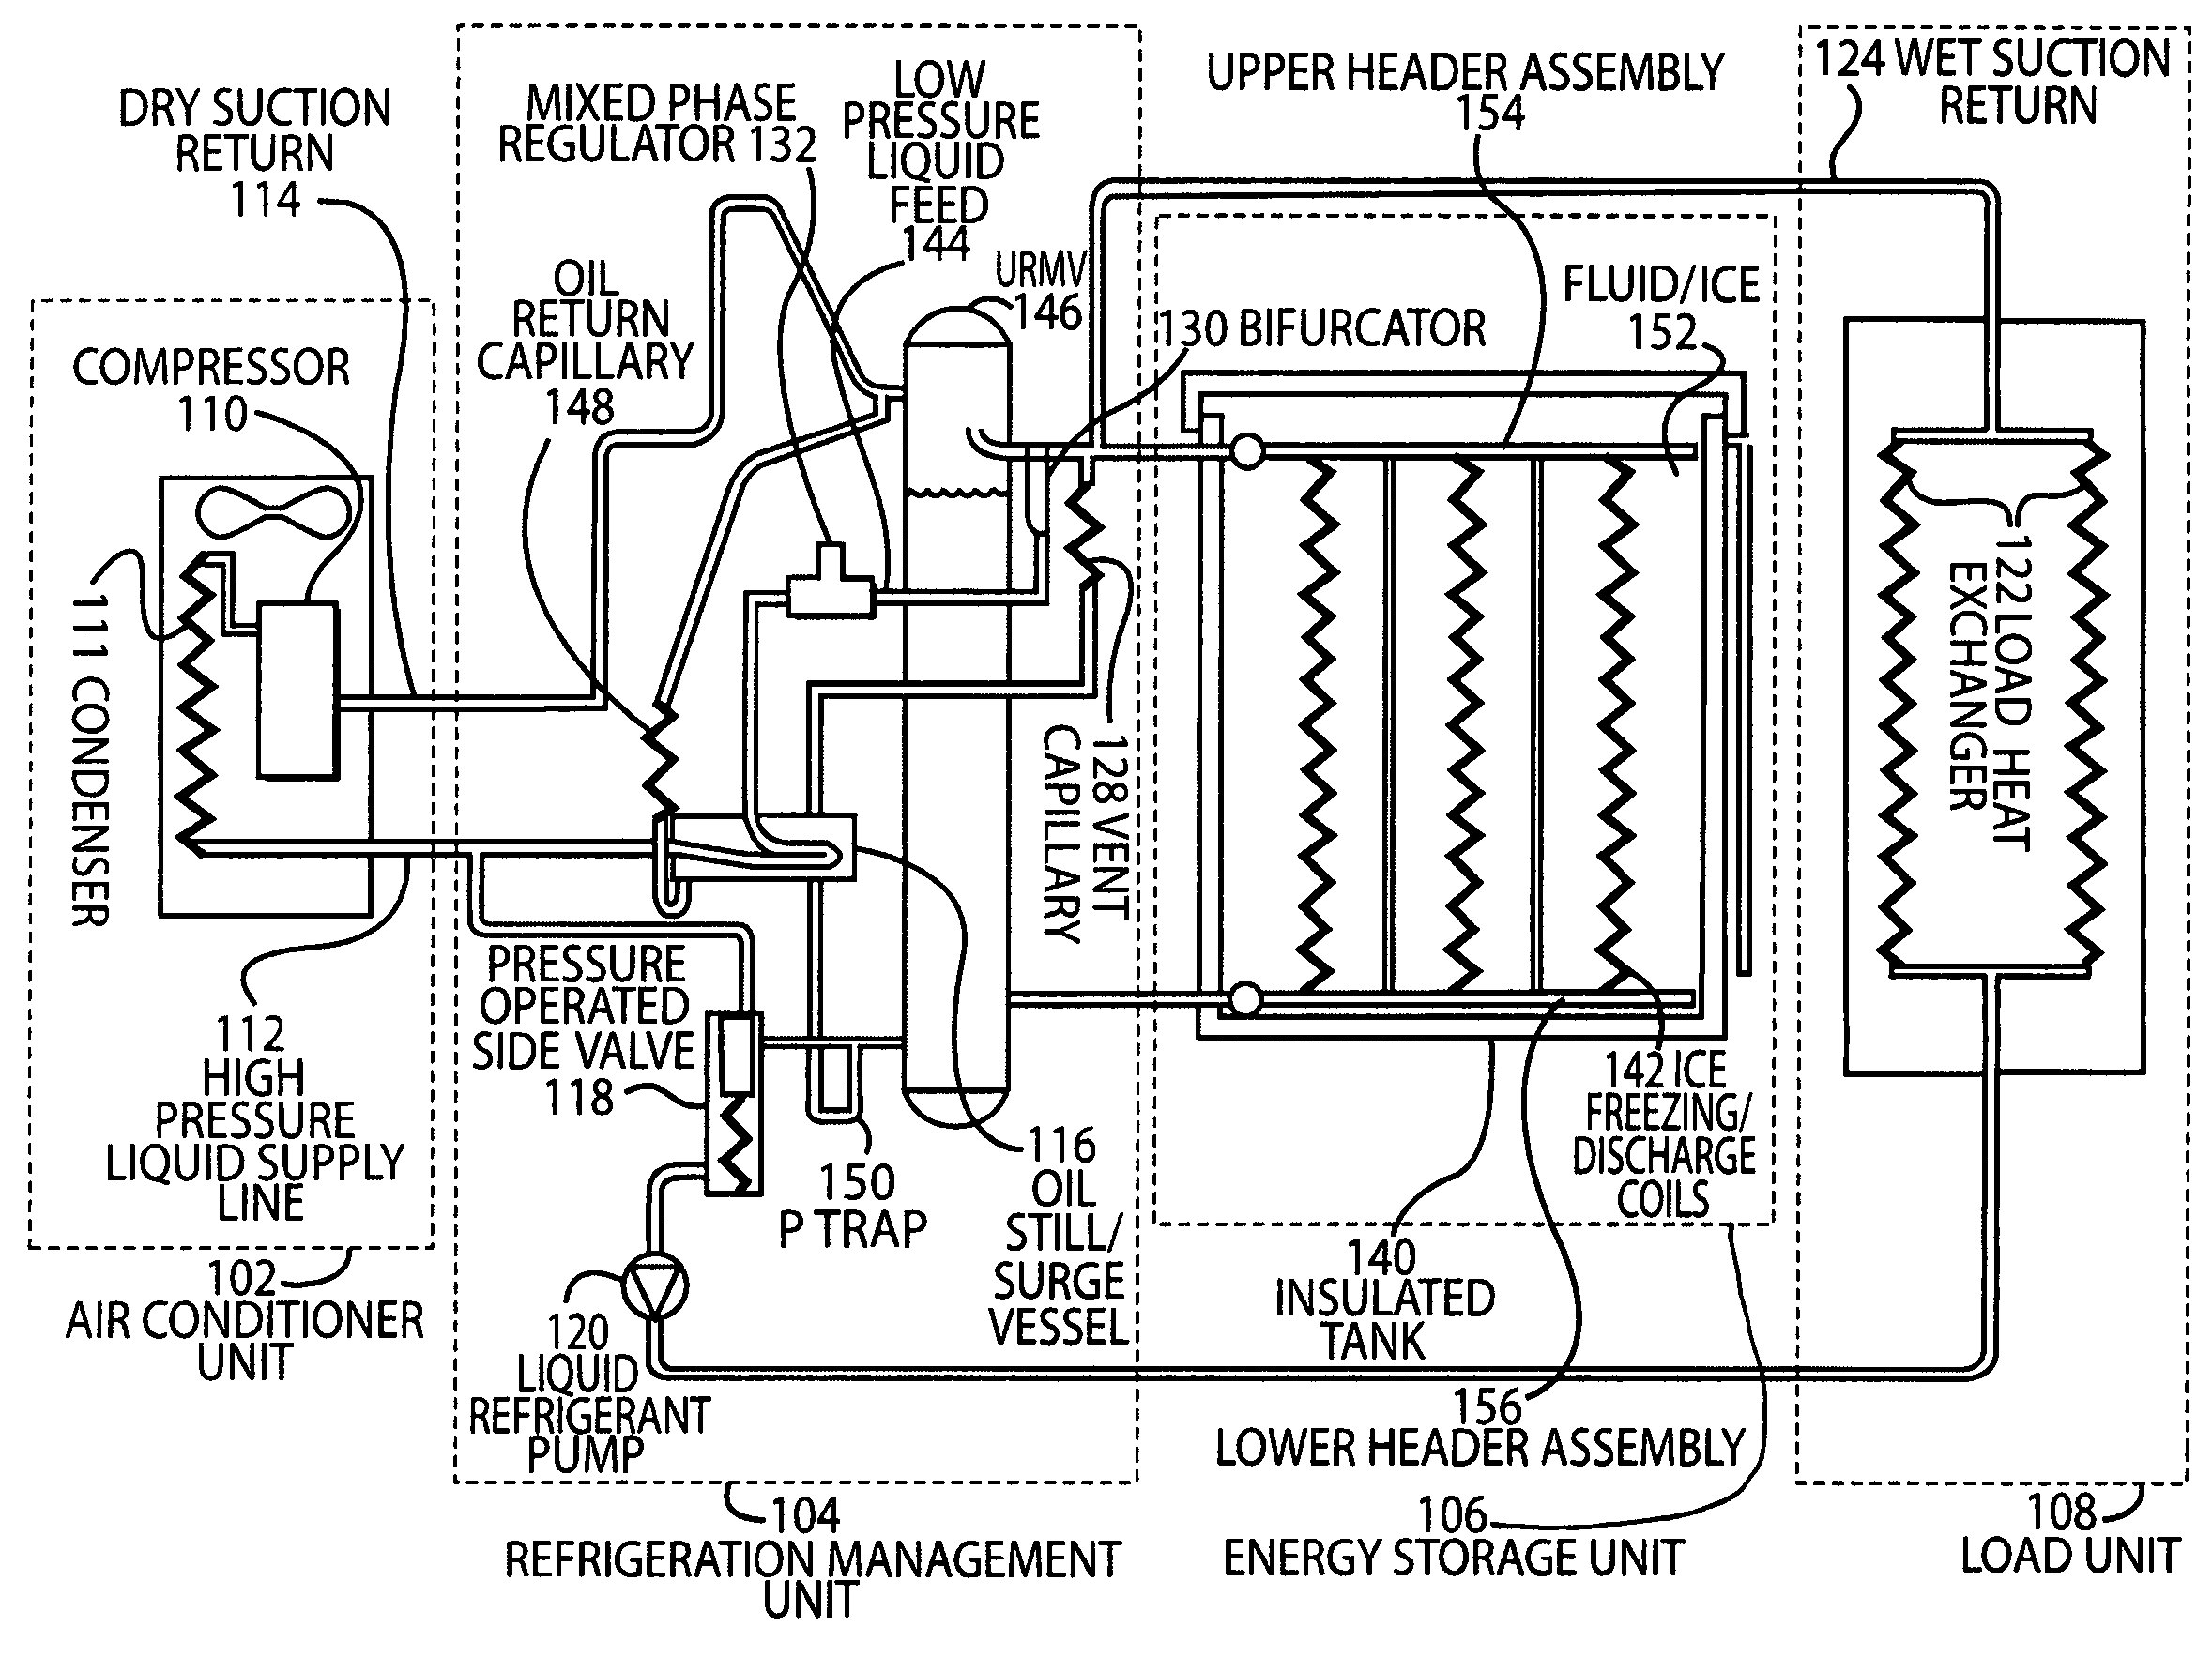 Refrigeration apparatus